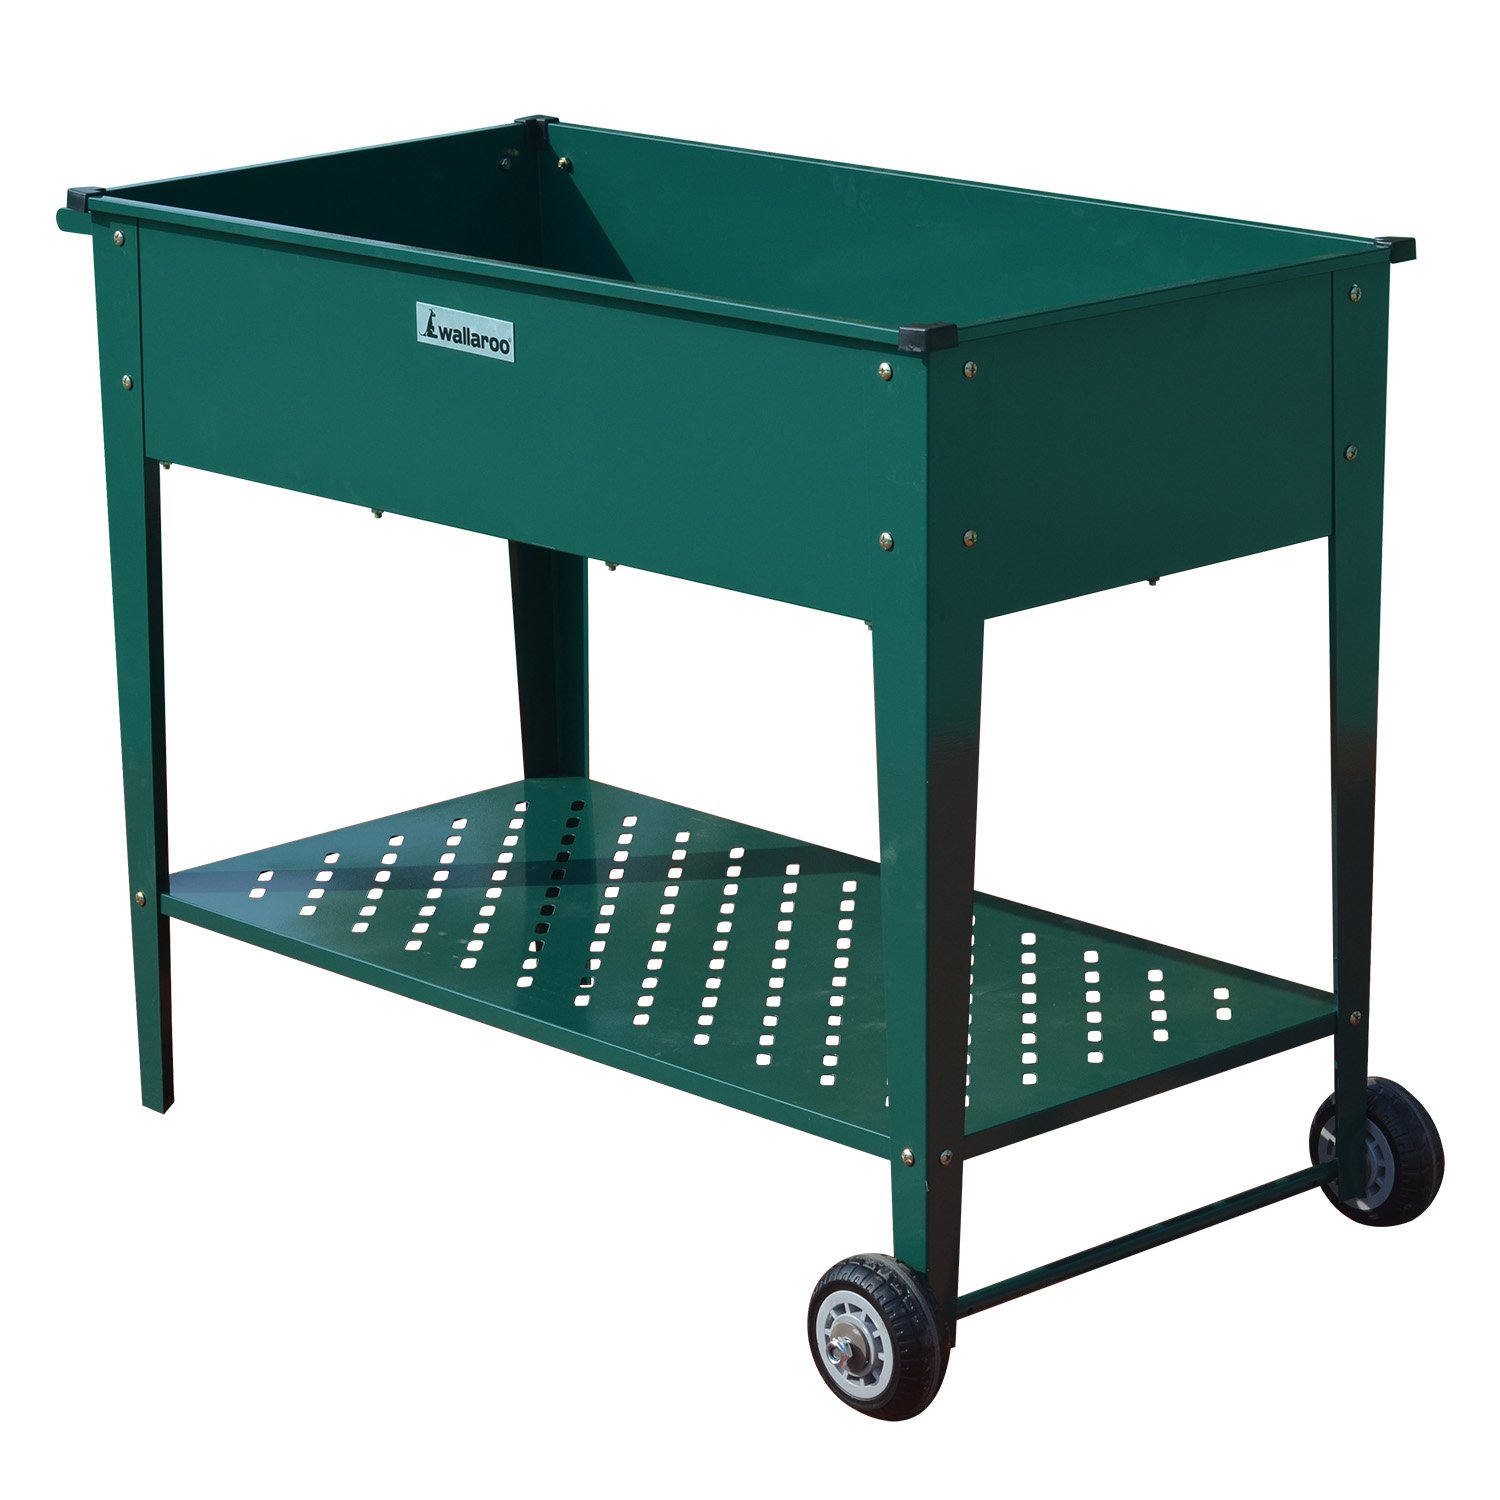 Wallaroo Garden Bed Cart Raised Planter Box 108.5 x 50.5 x 80cm Galvanized Steel - Green 2